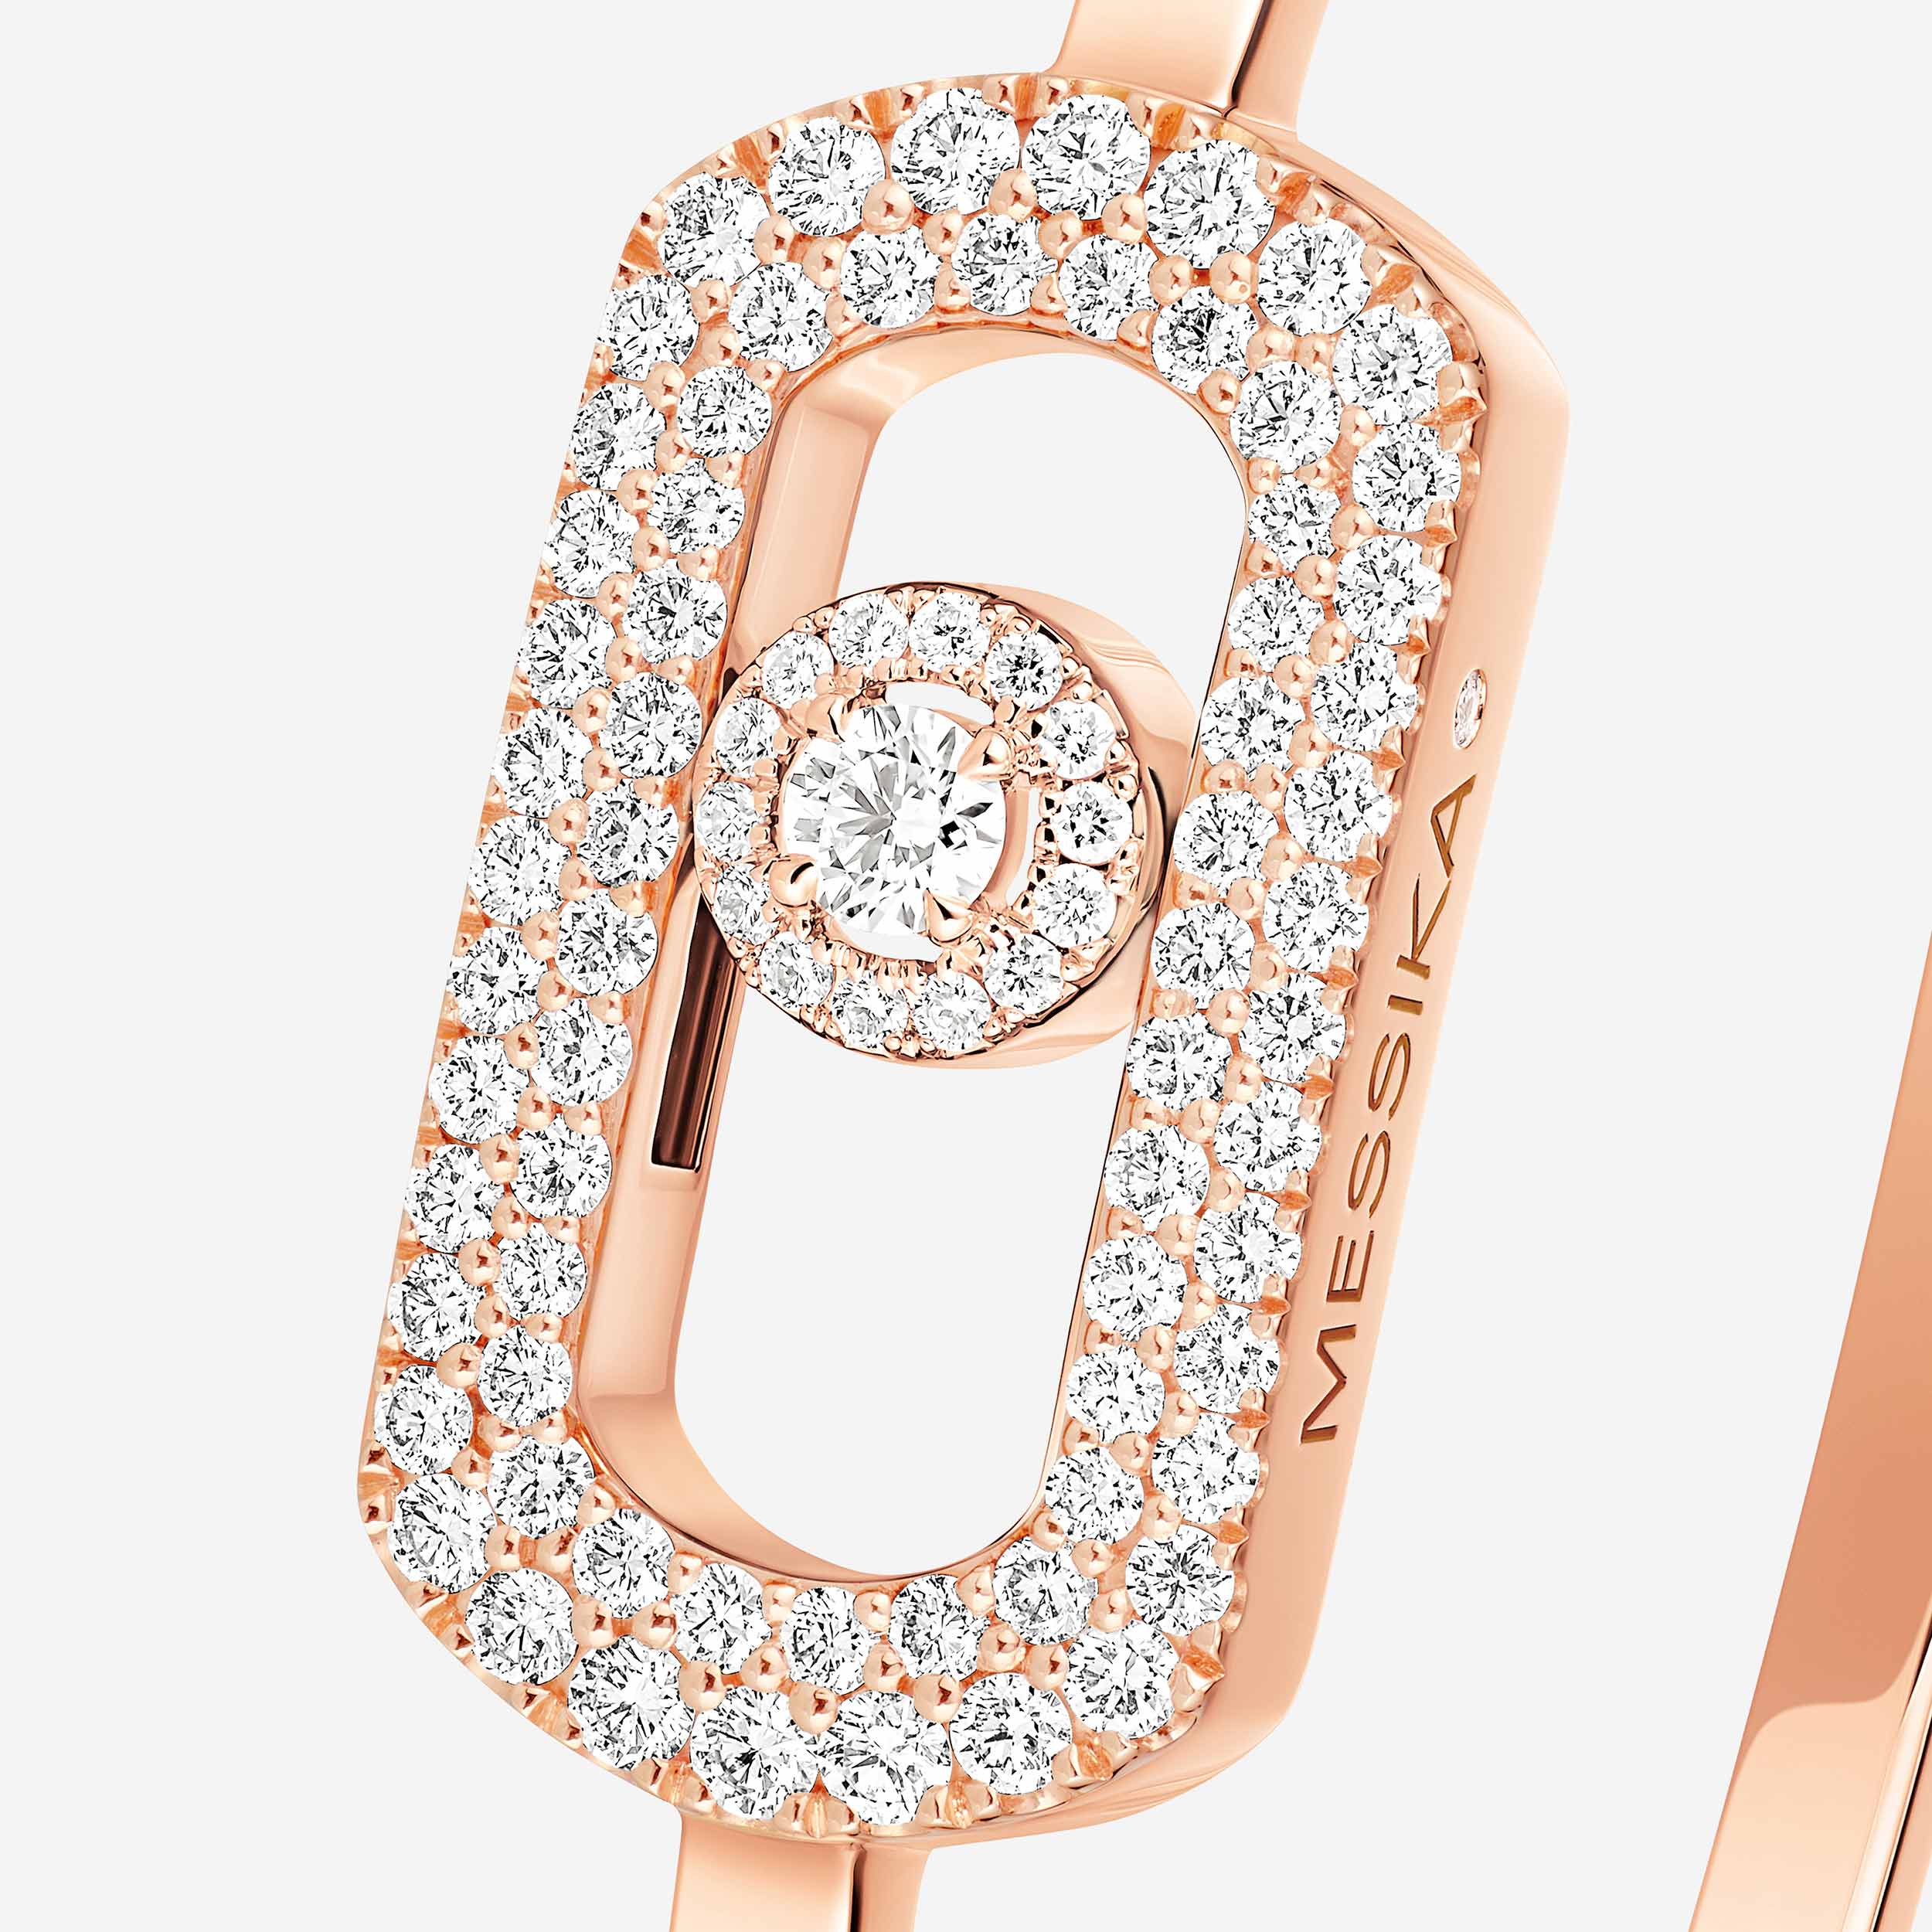 Bracelet For Her Pink Gold Diamond Esclava So Move con Pavé 13428-PG